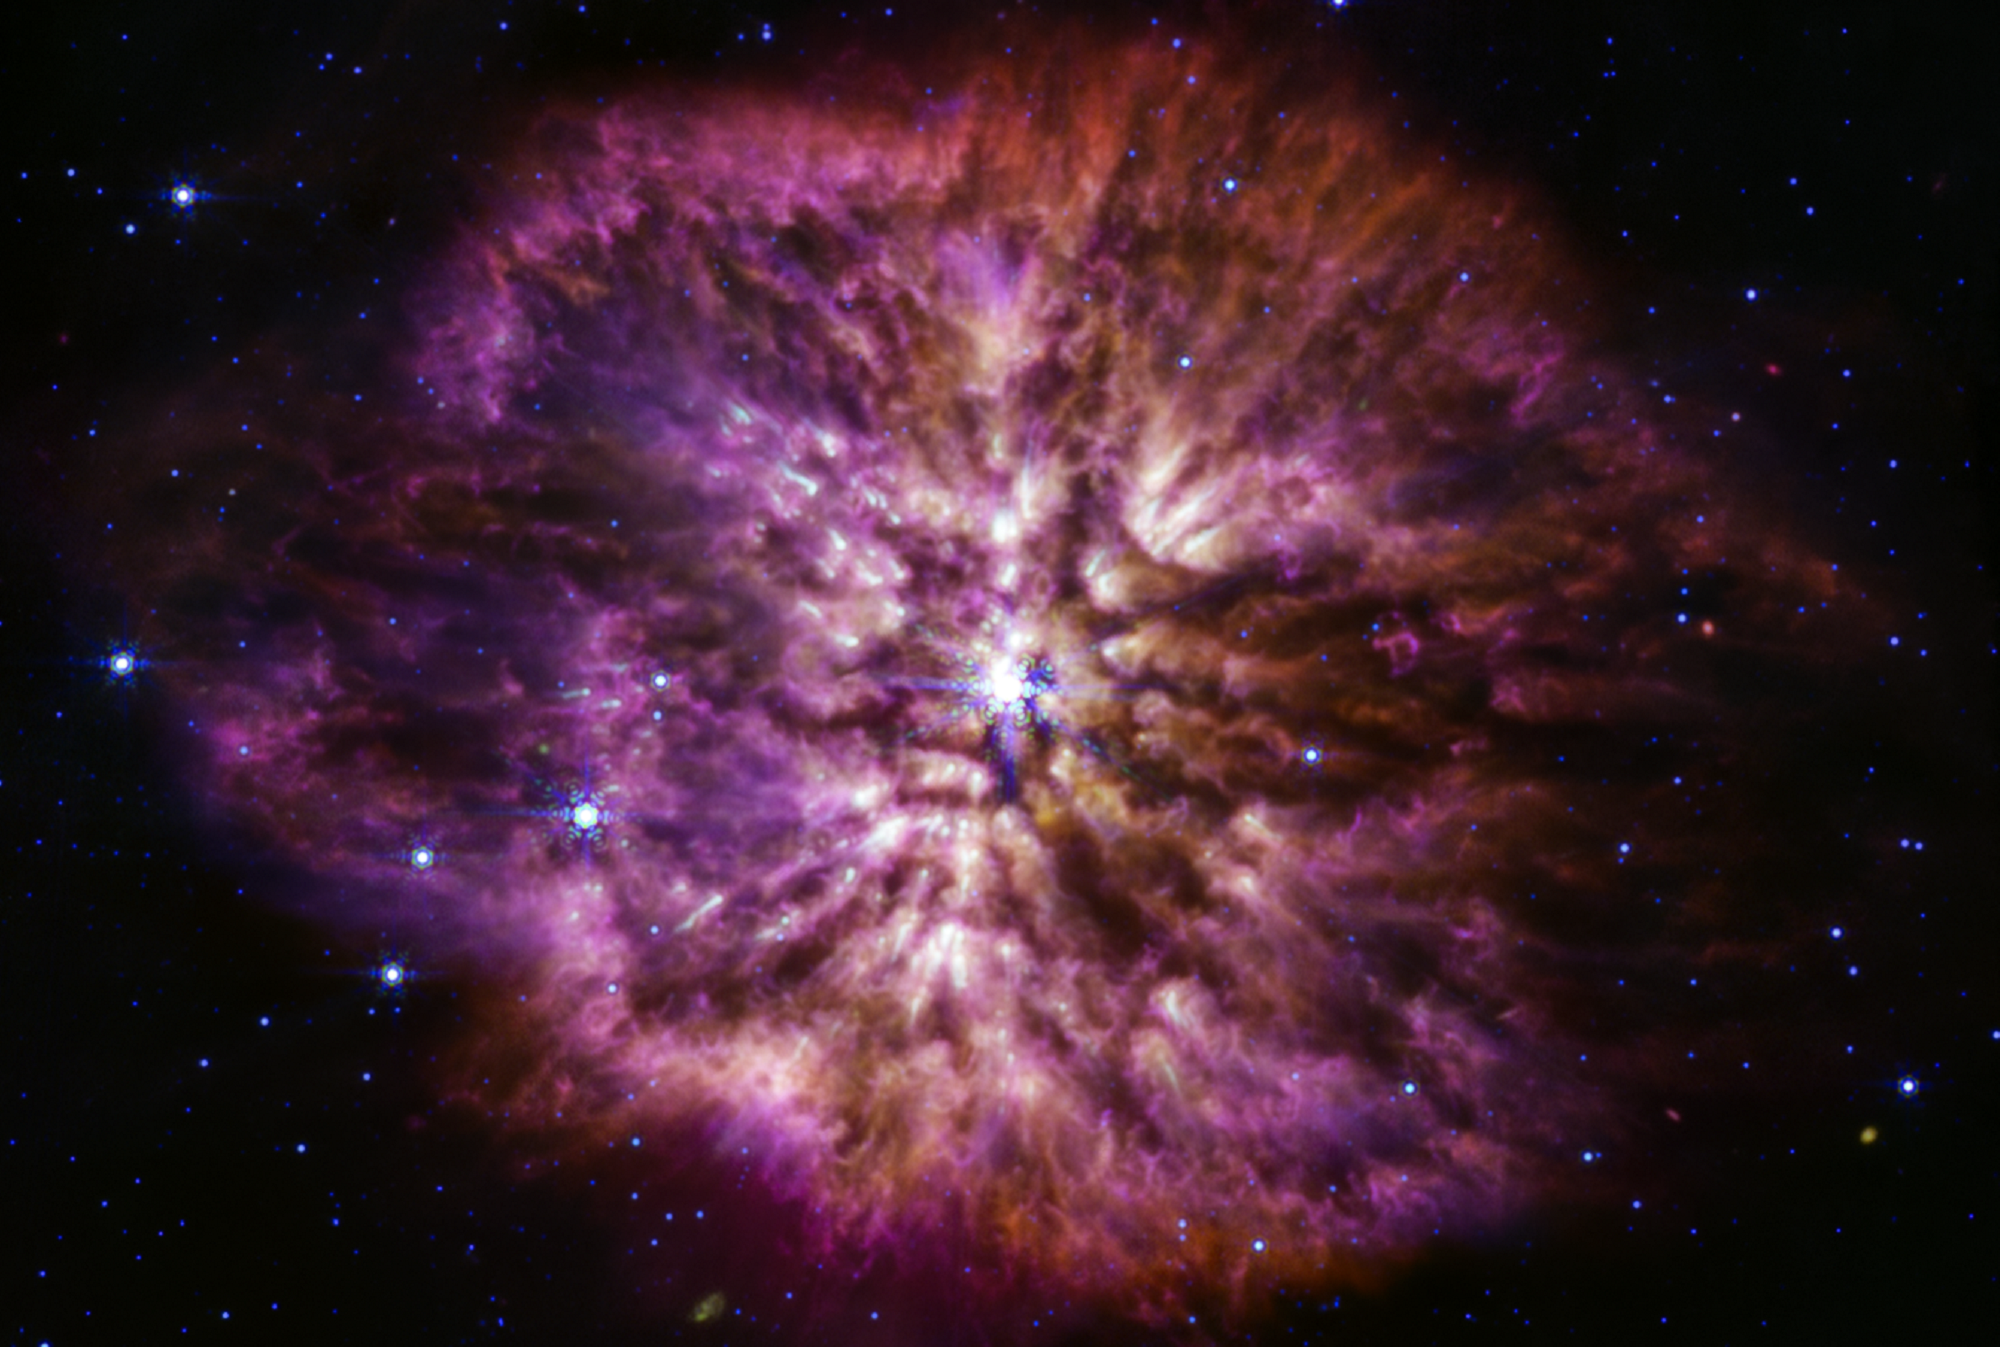 James Webb Space Telescope captures the beauty of a rare, violent phenomena